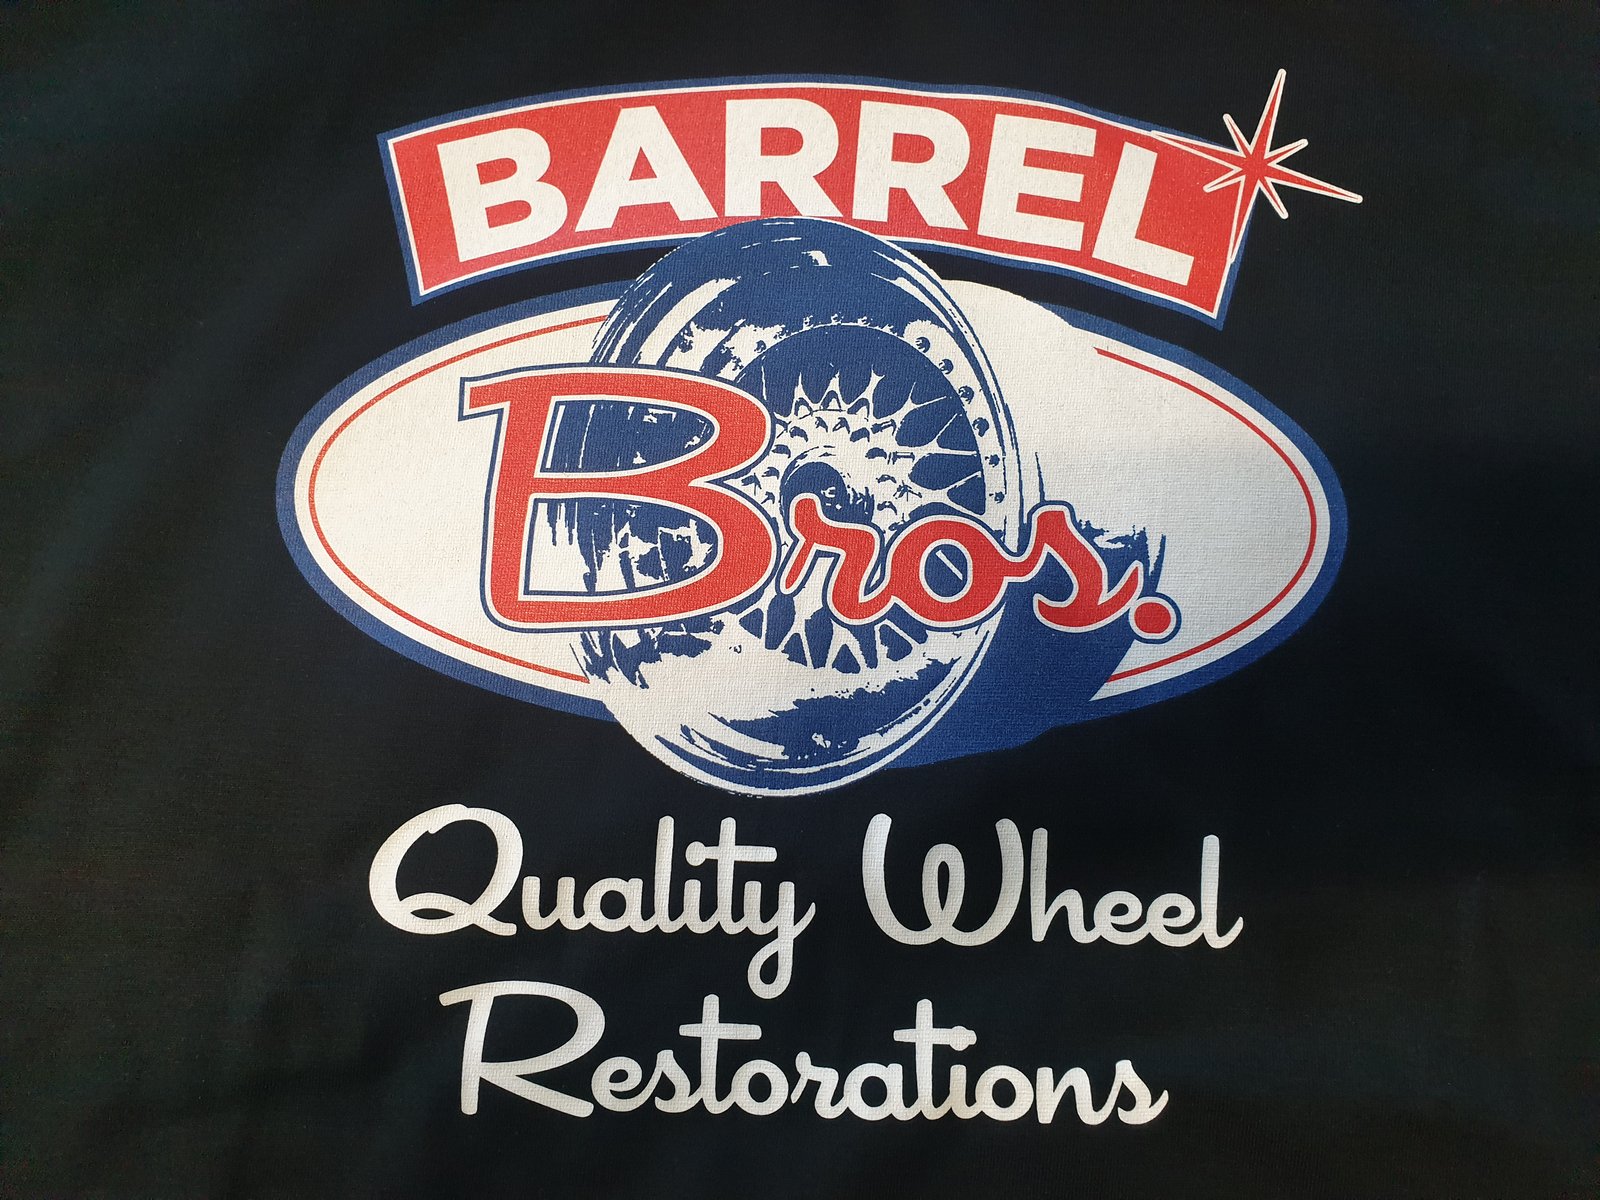 Barrel Bros. — Products